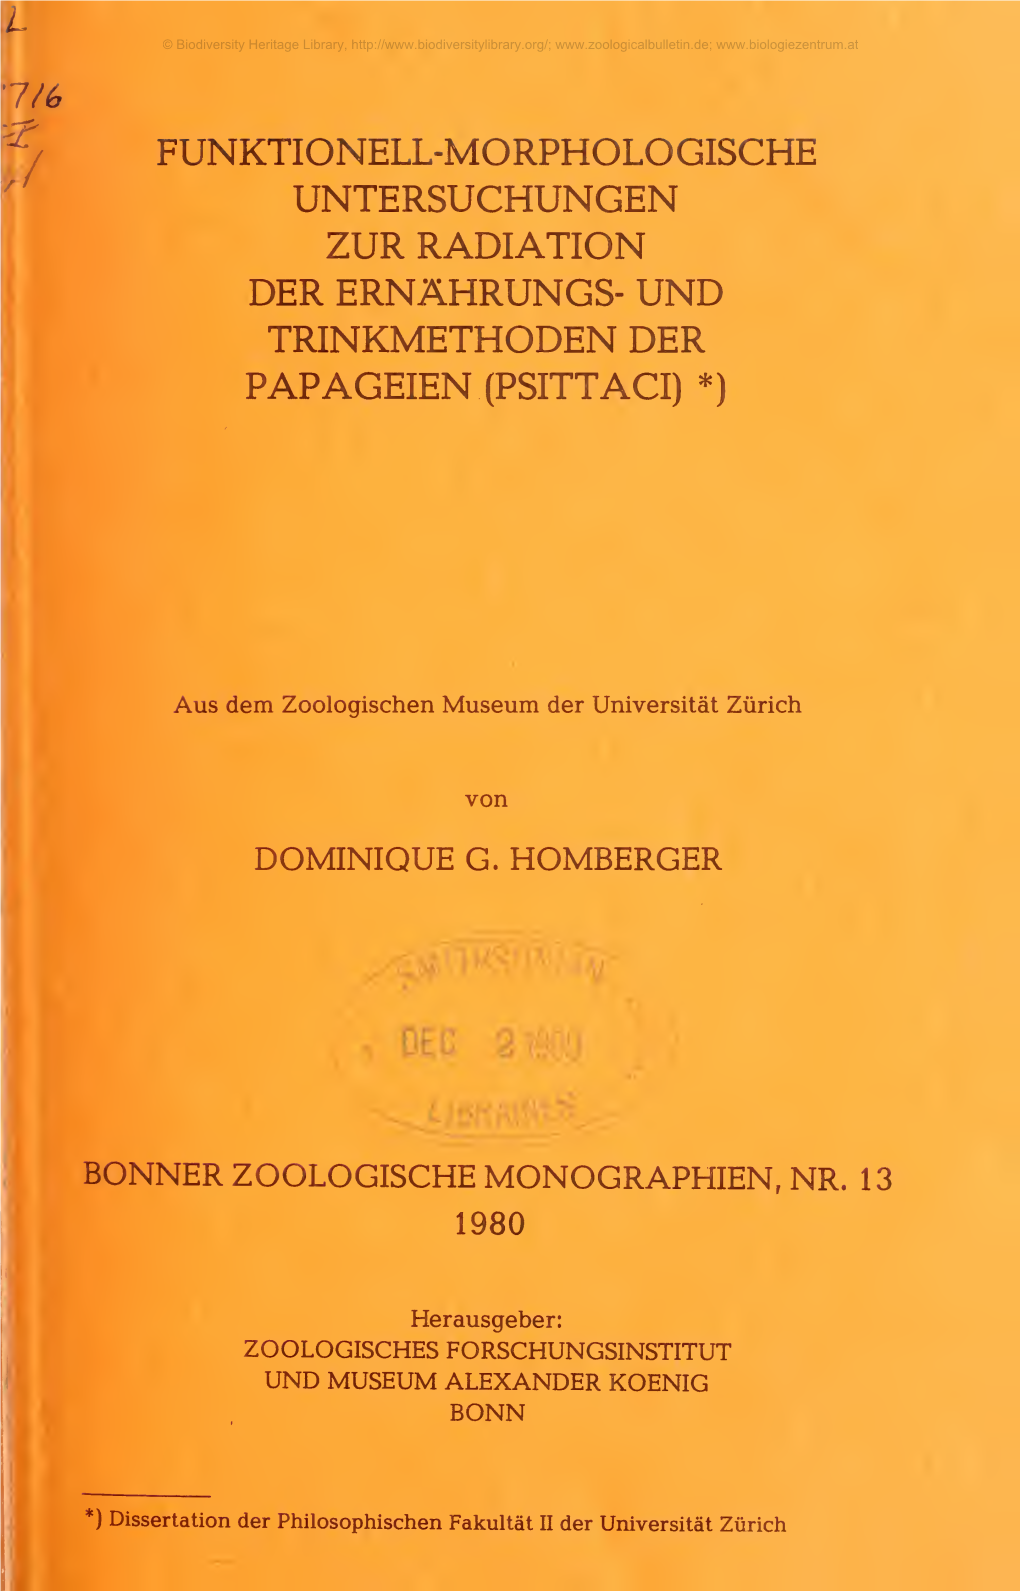 Bonner Zoologische Monographien, Nr